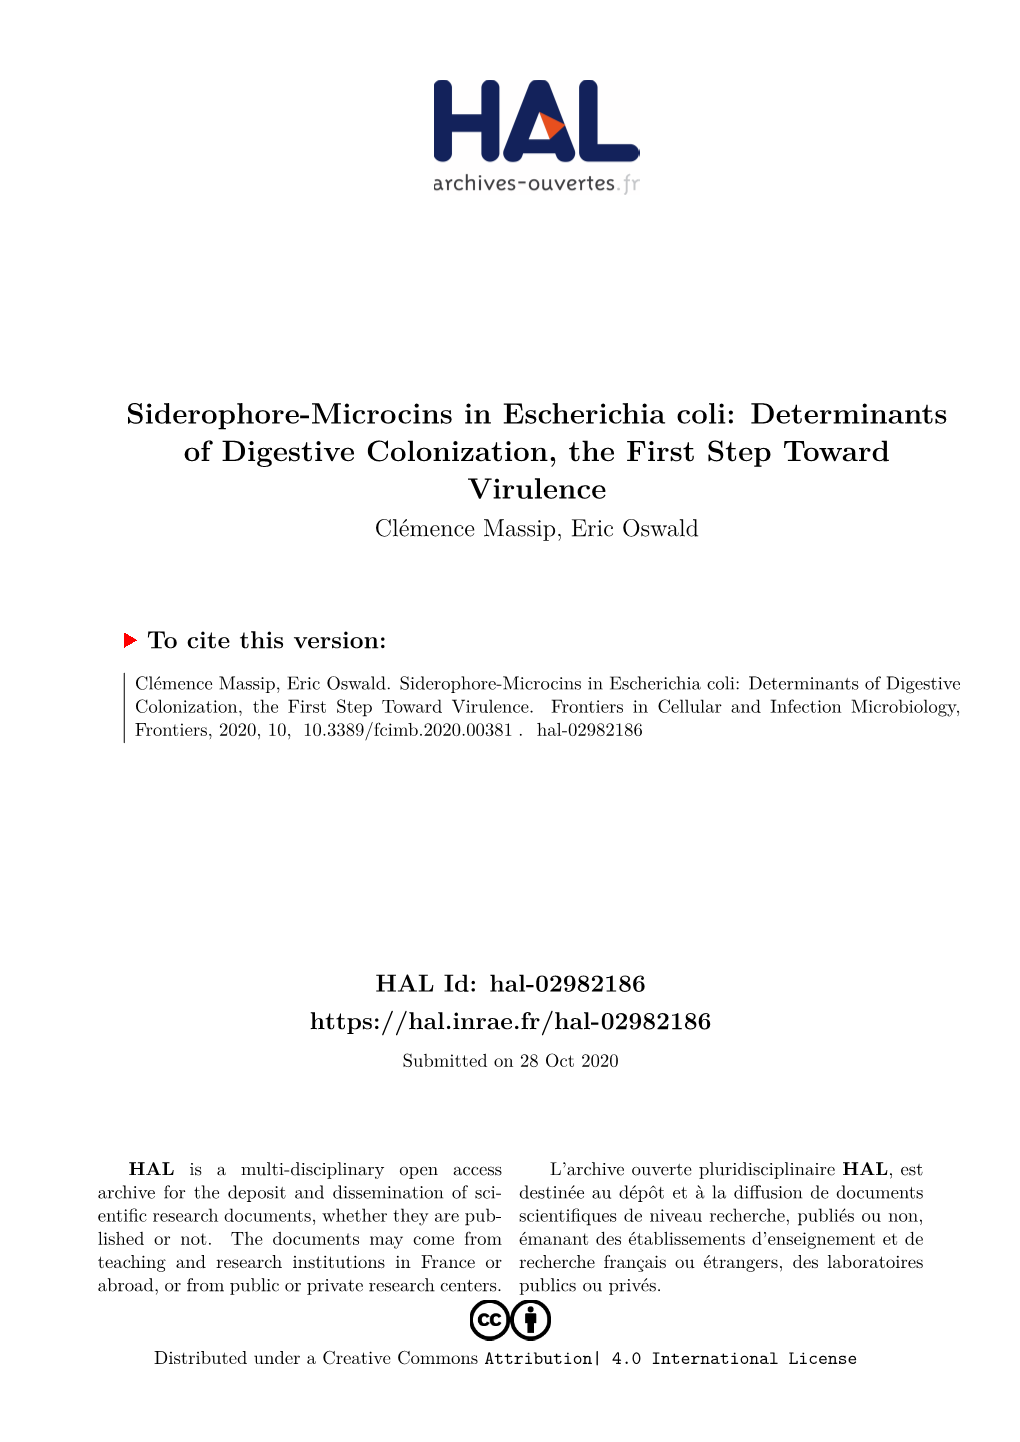 Siderophore-Microcins in Escherichia Coli: Determinants of Digestive Colonization, the First Step Toward Virulence Clémence Massip, Eric Oswald